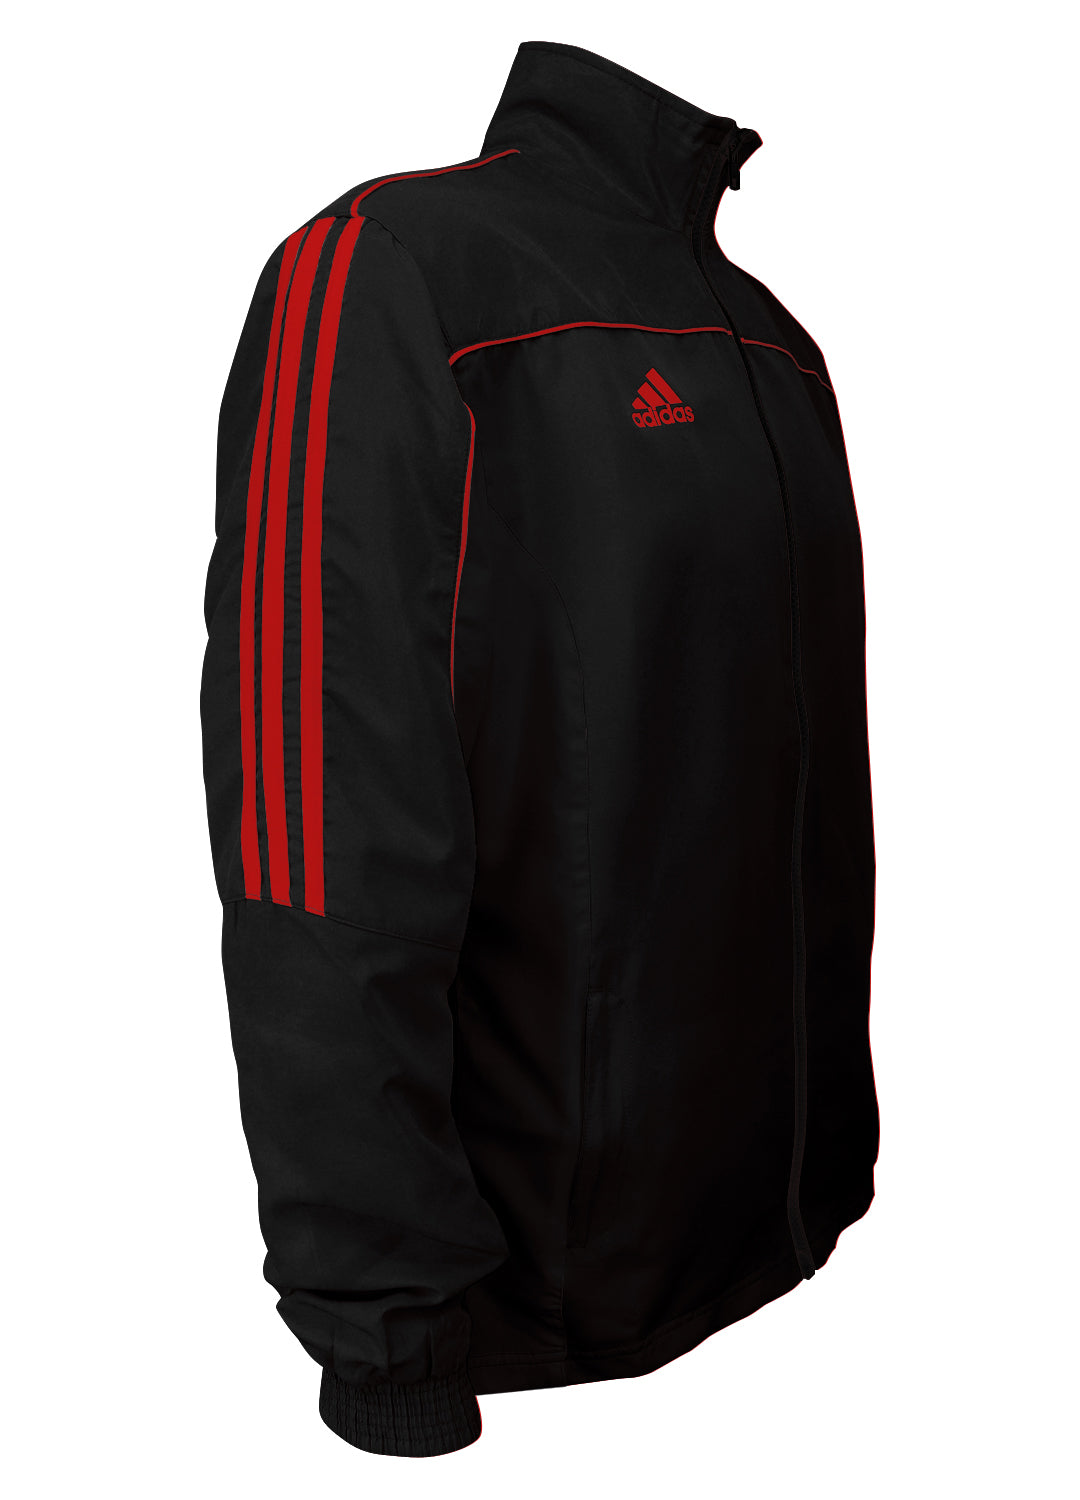 adidas black red striped jacket